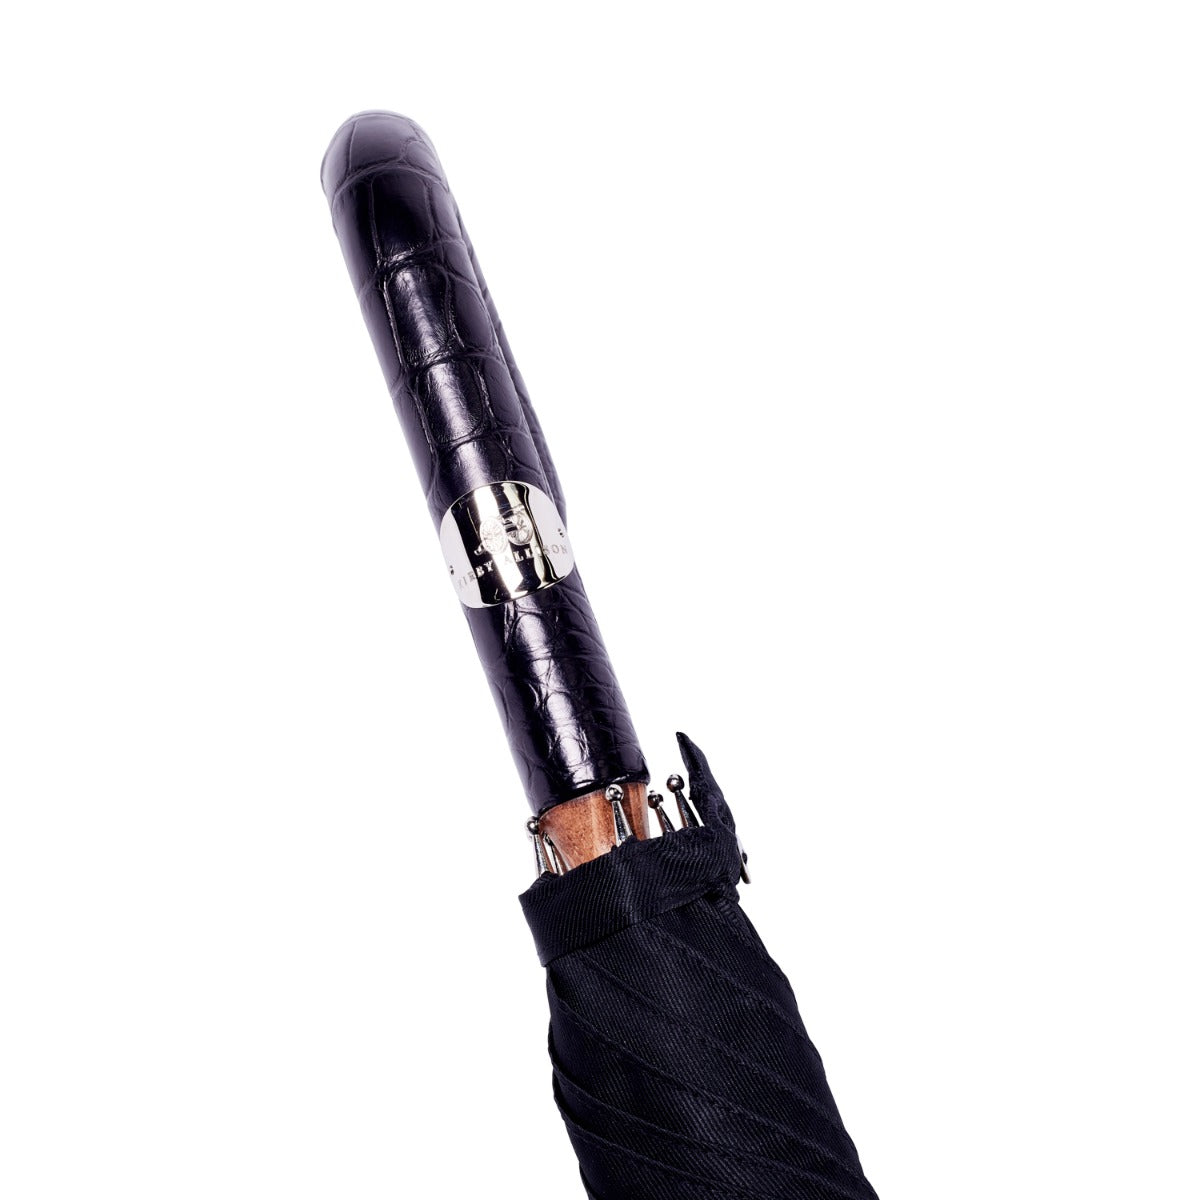 A KirbyAllison.com Black Alligator Solid Stick umbrella with a Black Canopy.